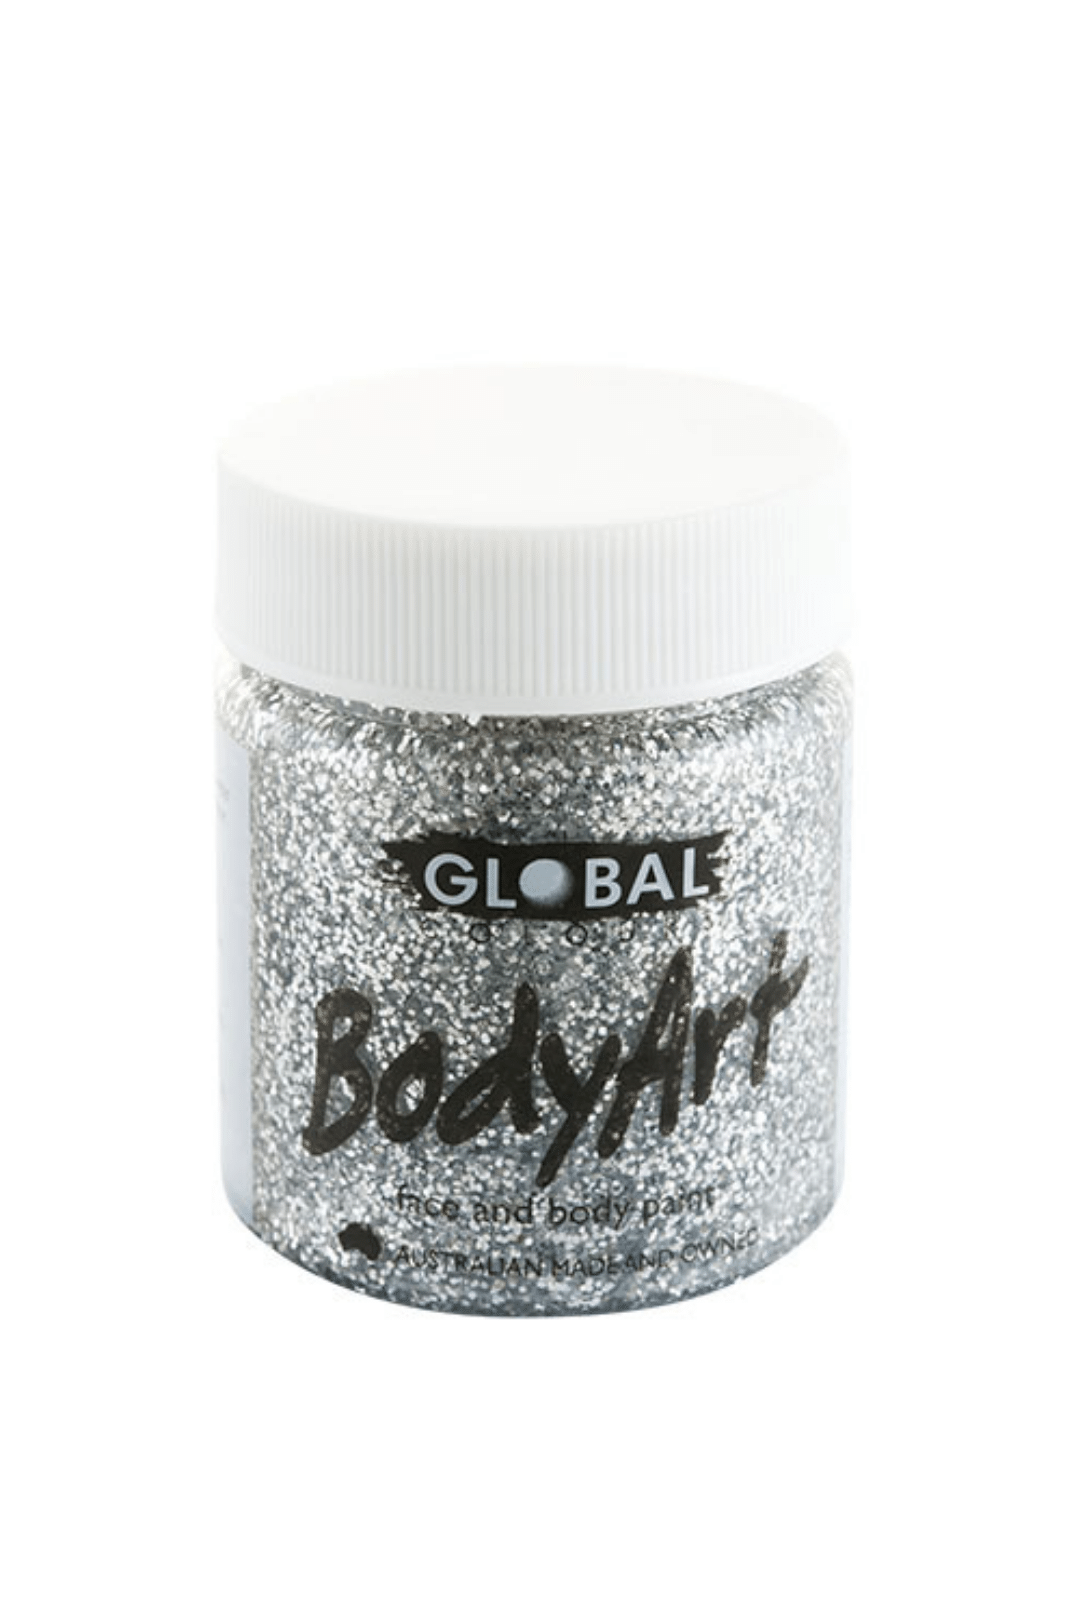 Global BodyArt Silver Glitter Face & Body Paint